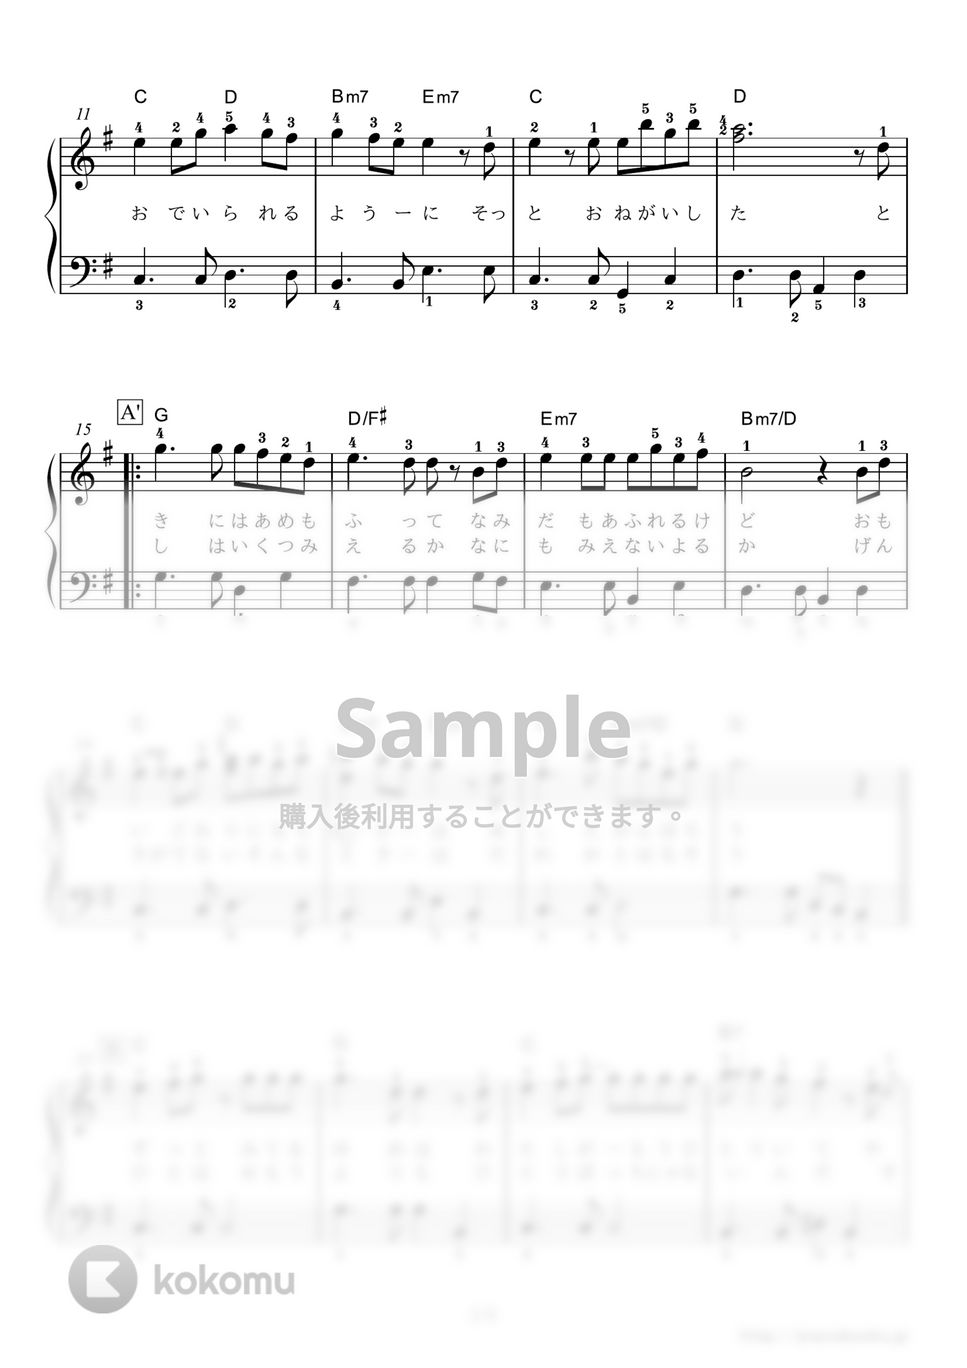 AKB48 - ３６５日の紙飛行機 (NHK連続テレビ小説『あさが来た』主題歌) by ピアノの本棚